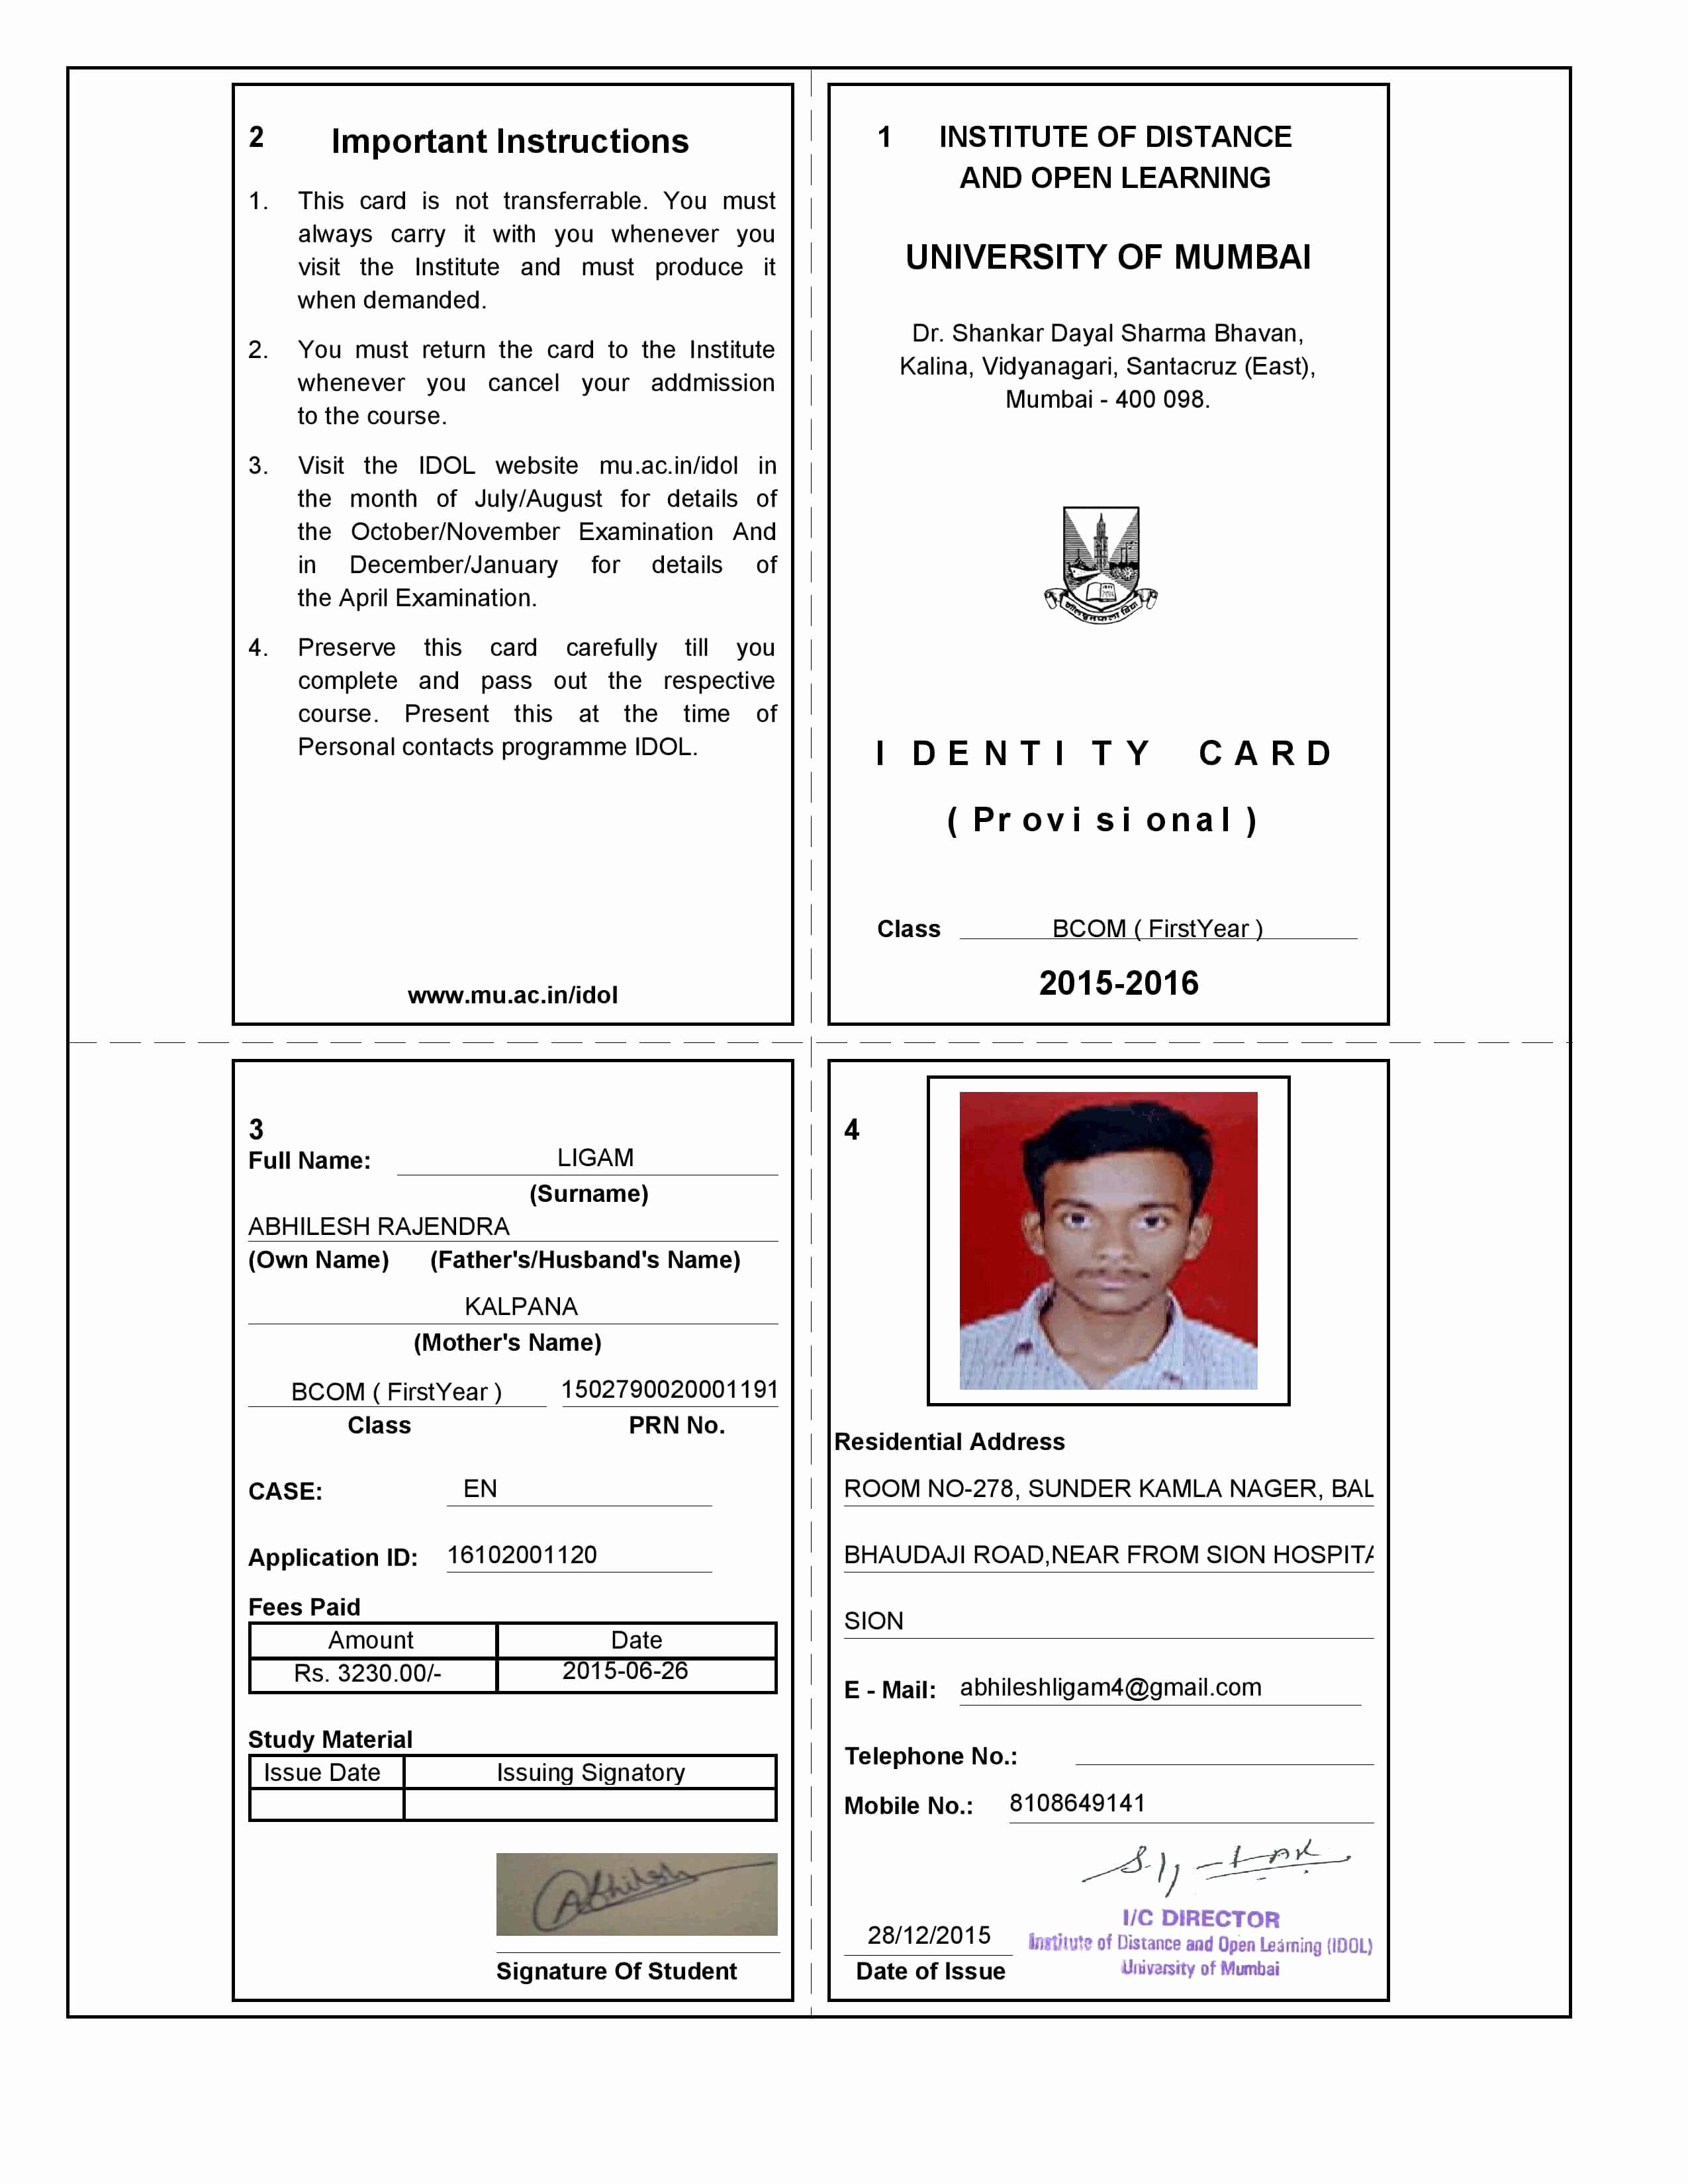 Sample Identity Card Luxury Dangerous Security Flaw In Idol S Website